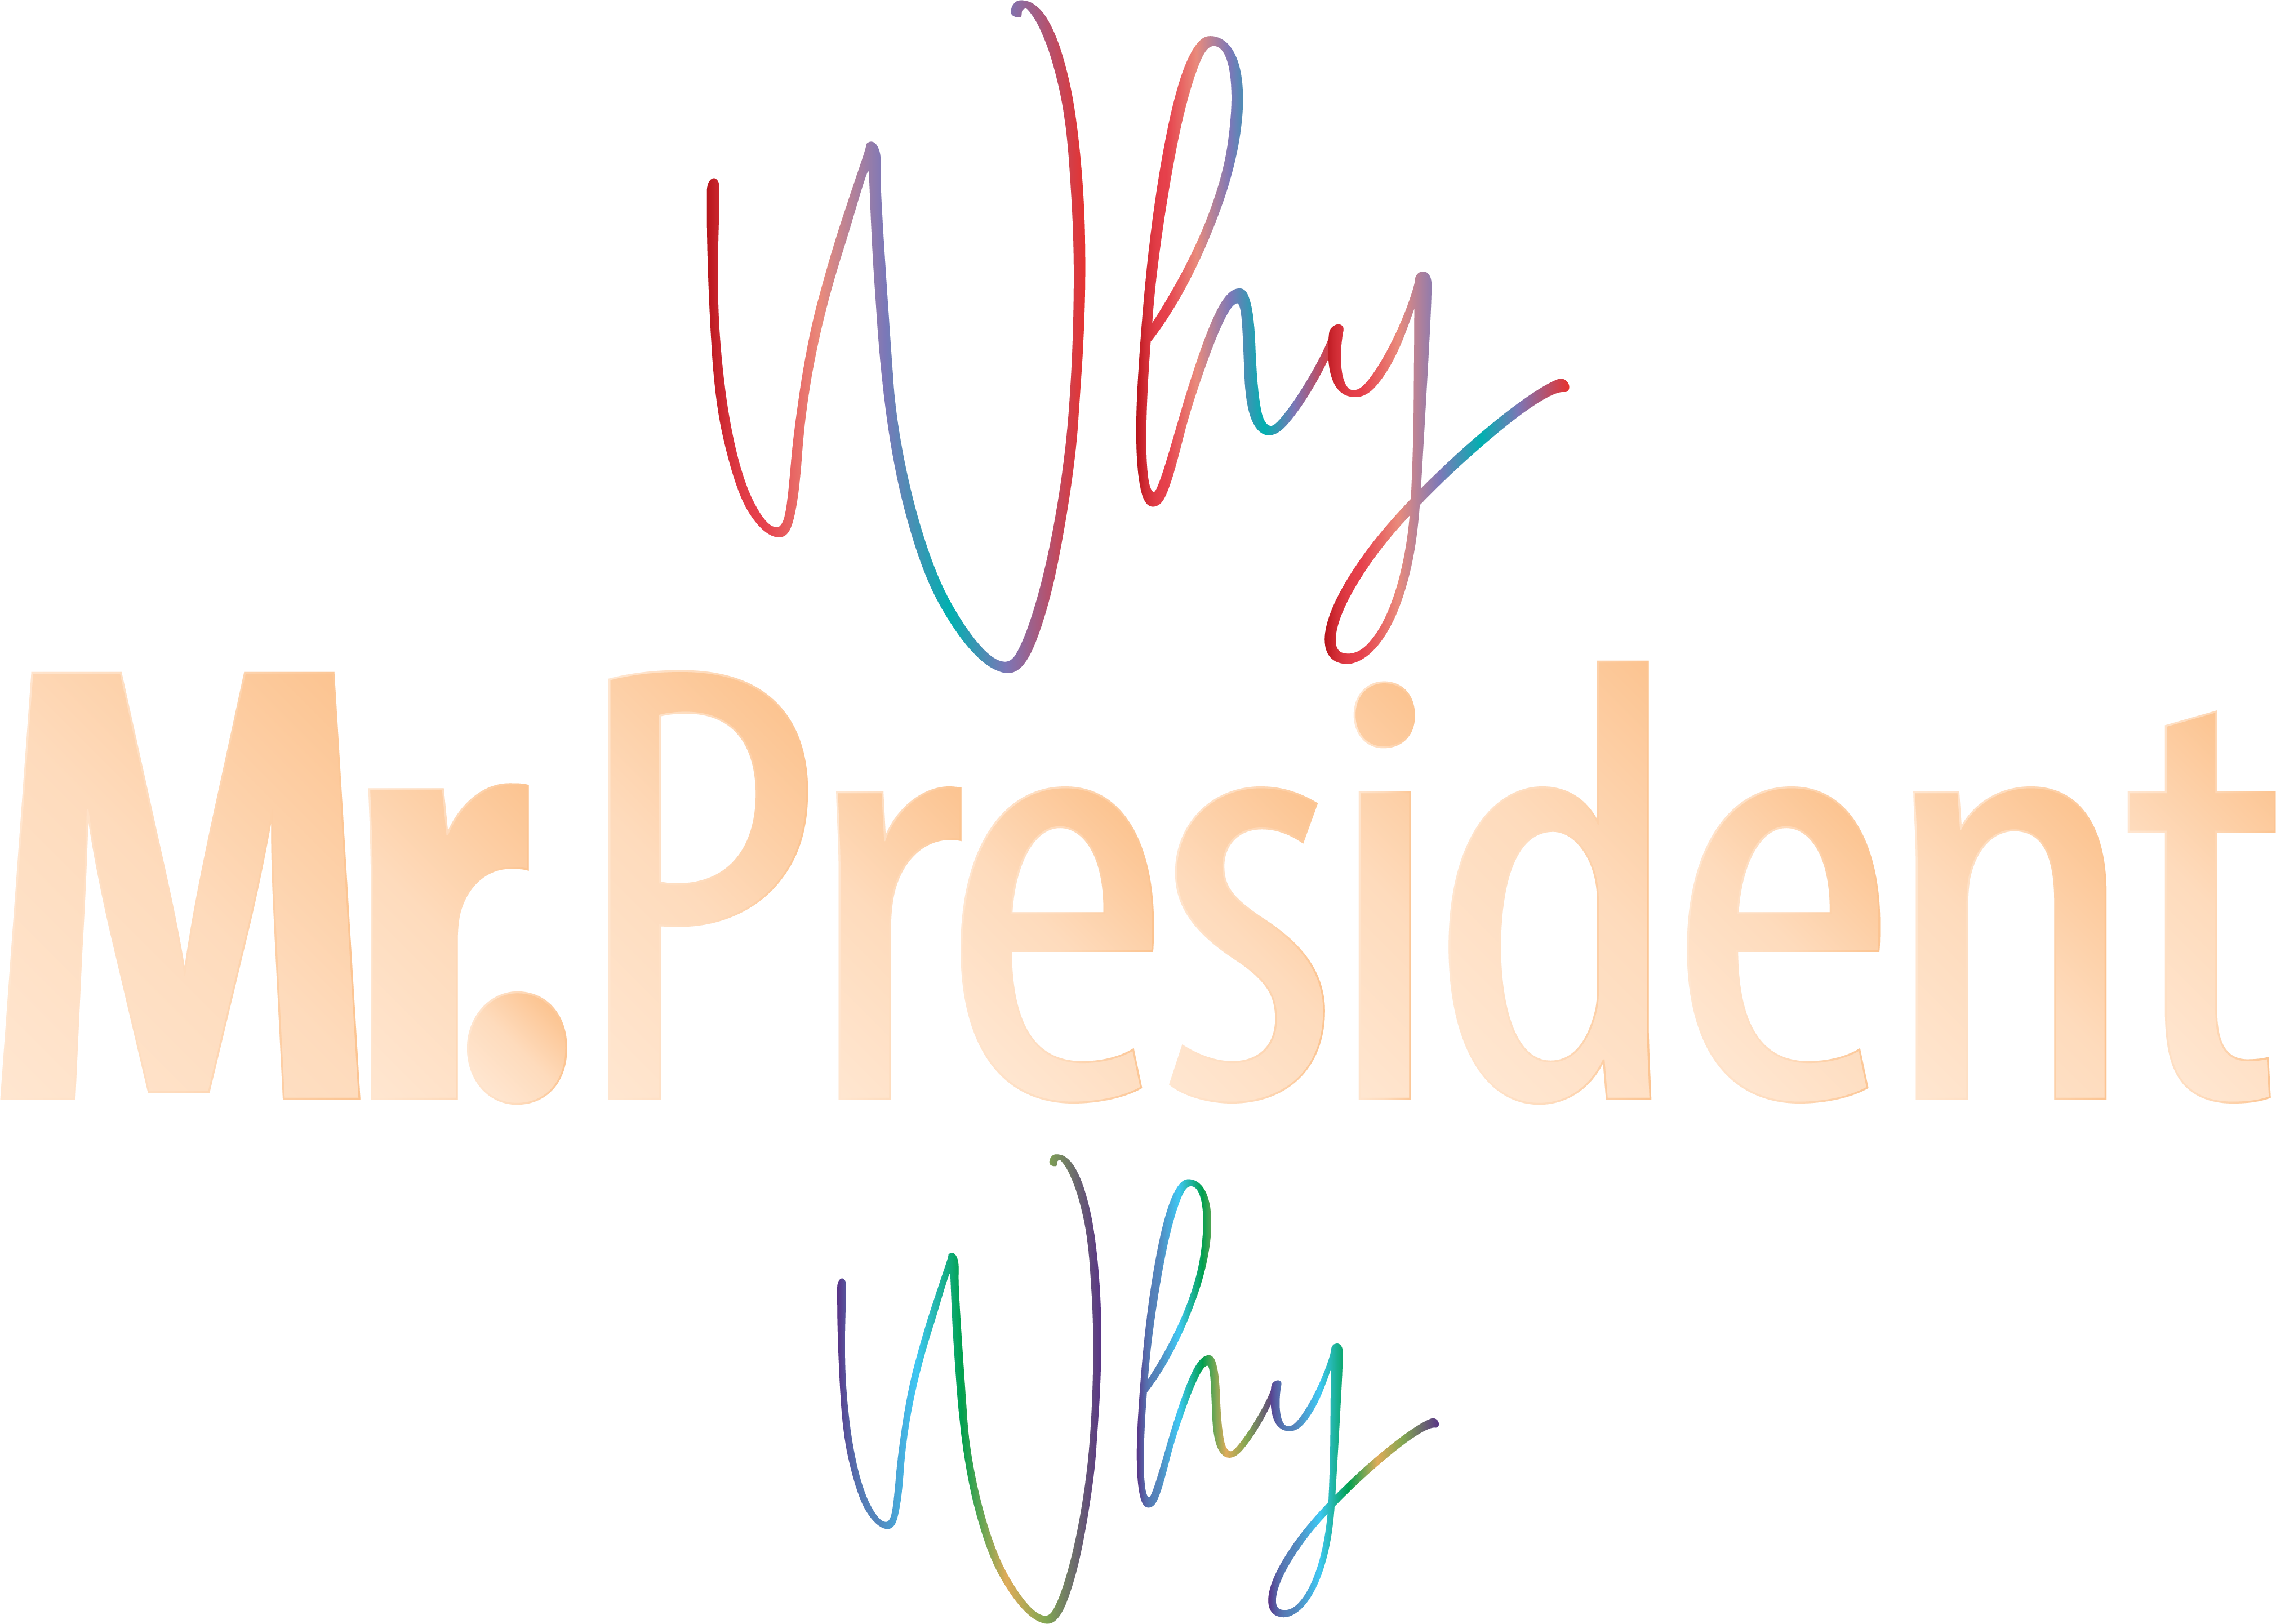 whymrpresidentwhy.com Why Mr. President Why logo